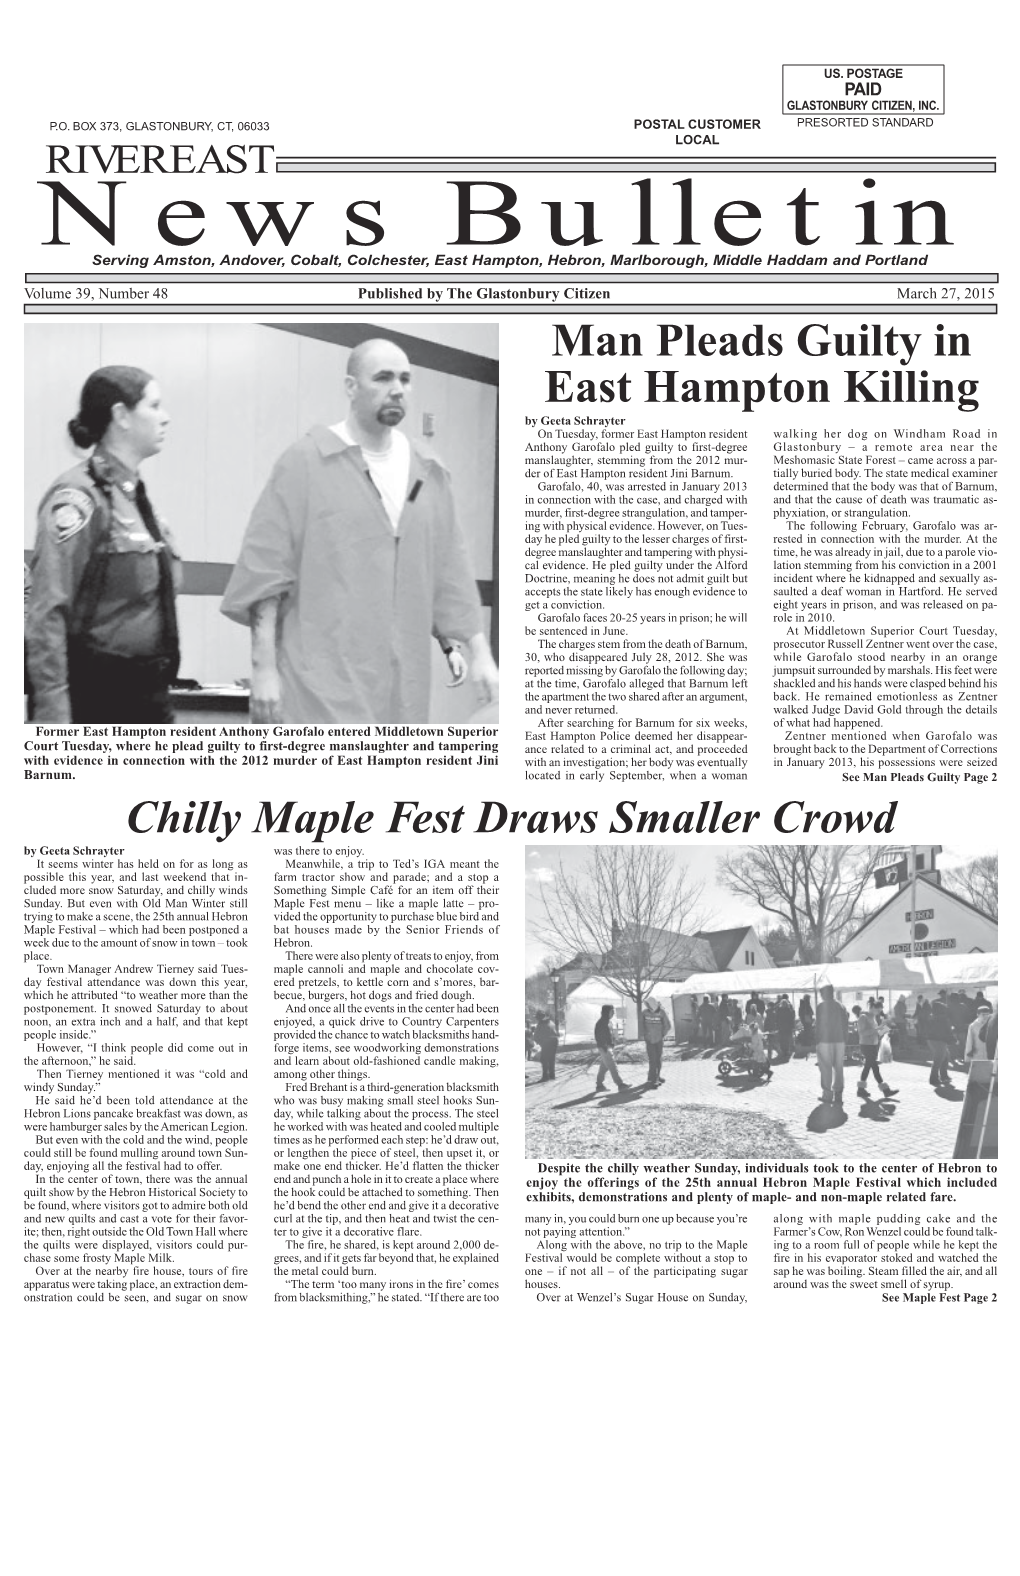 Man Pleads Guilty in East Hampton Killing Chilly Maple Fest Draws